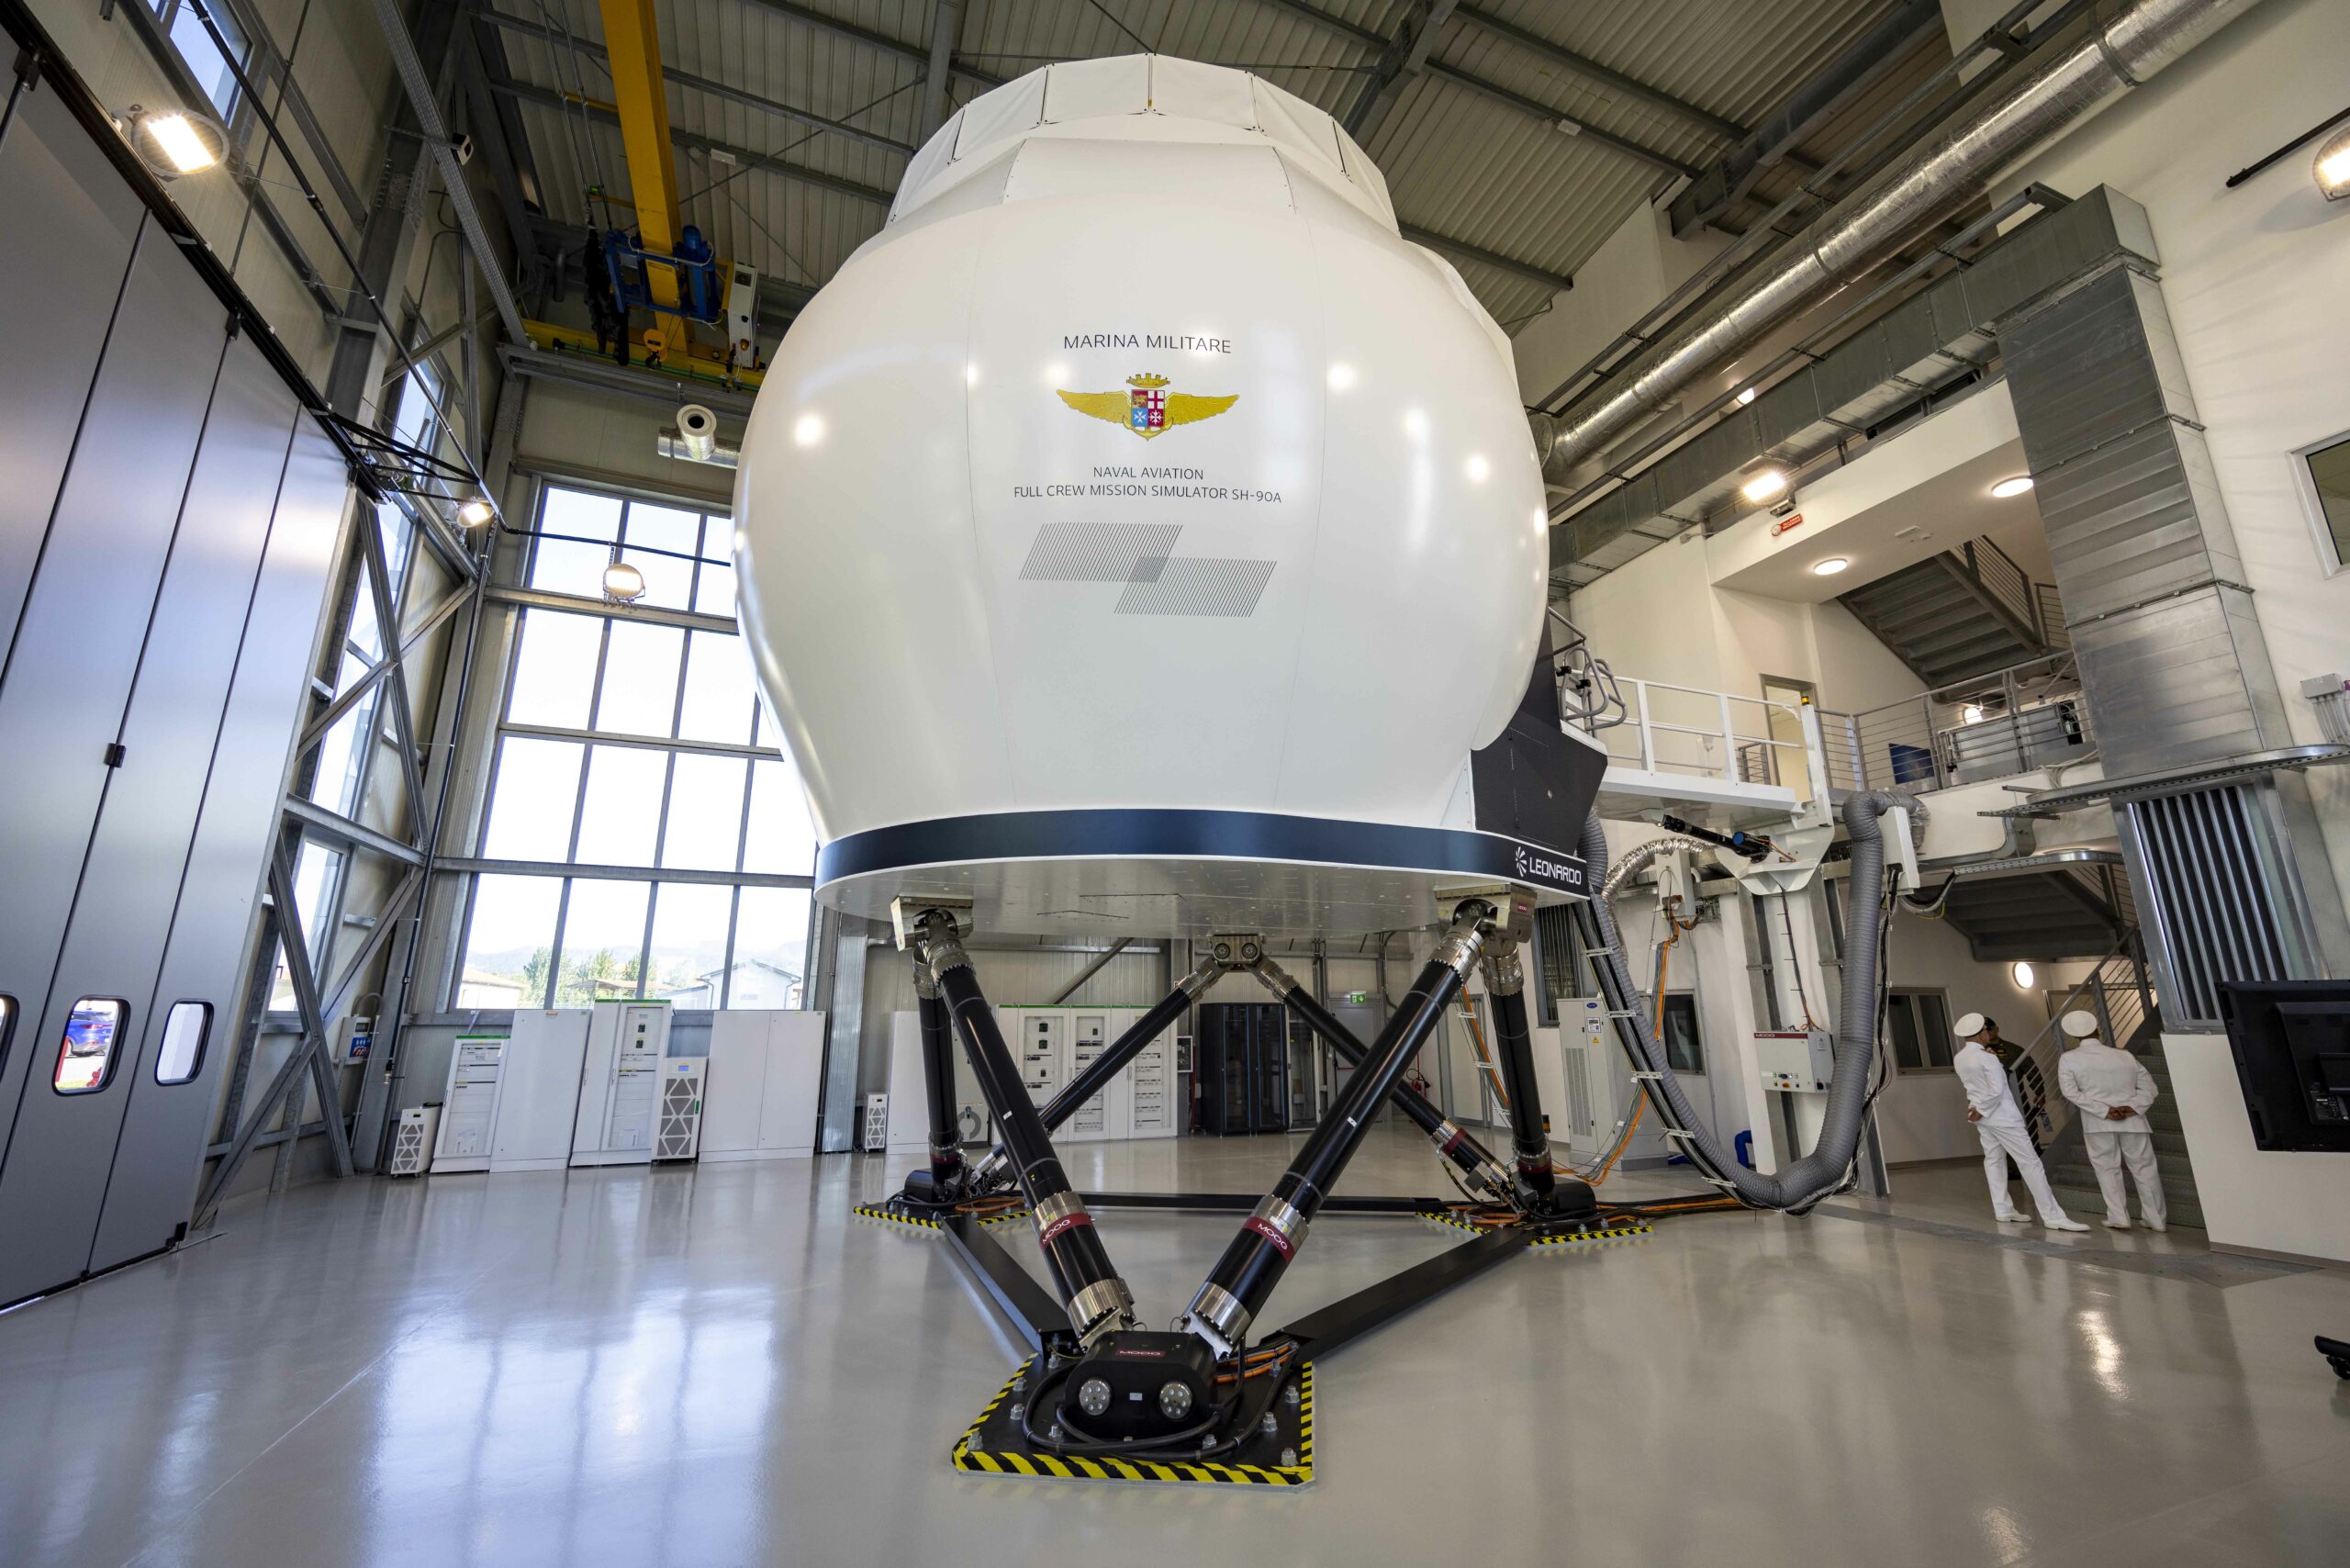 Flight simulator at the Full Crew Simulation Training Center in Maristaeli Luni Base. Photo: Leonardo